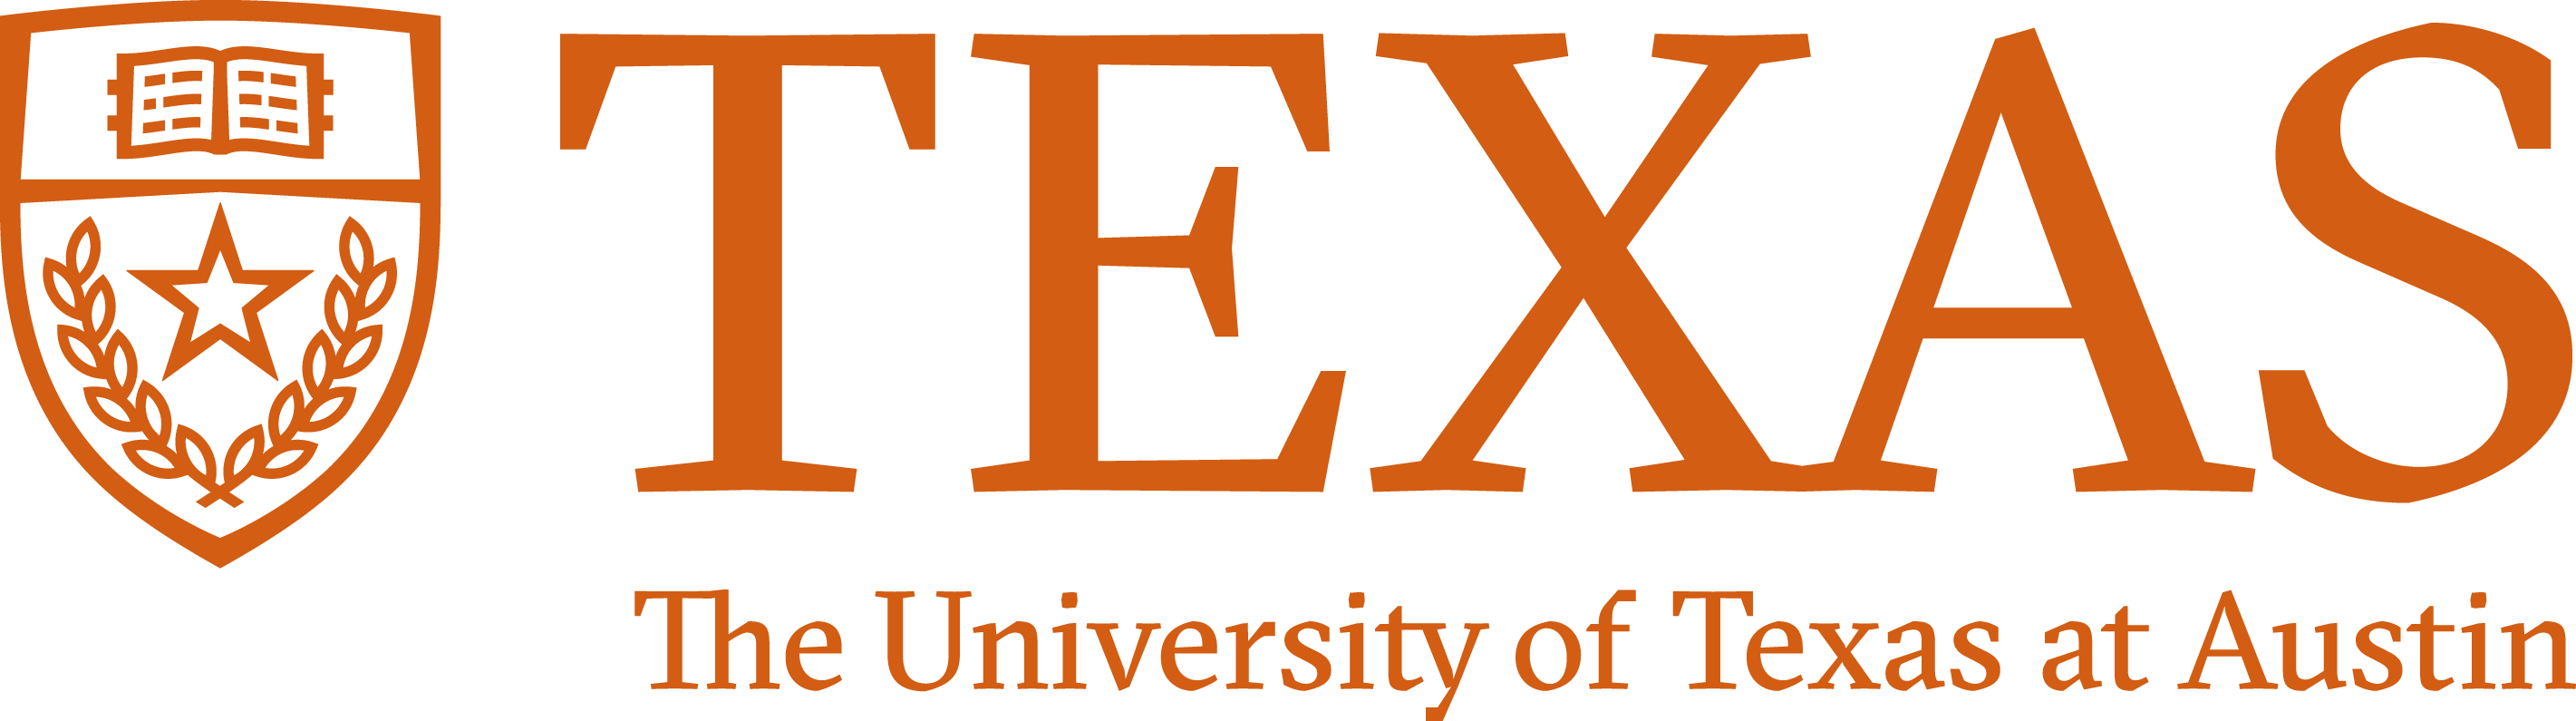 Логотип Техасского университета в Остине – STAR Network